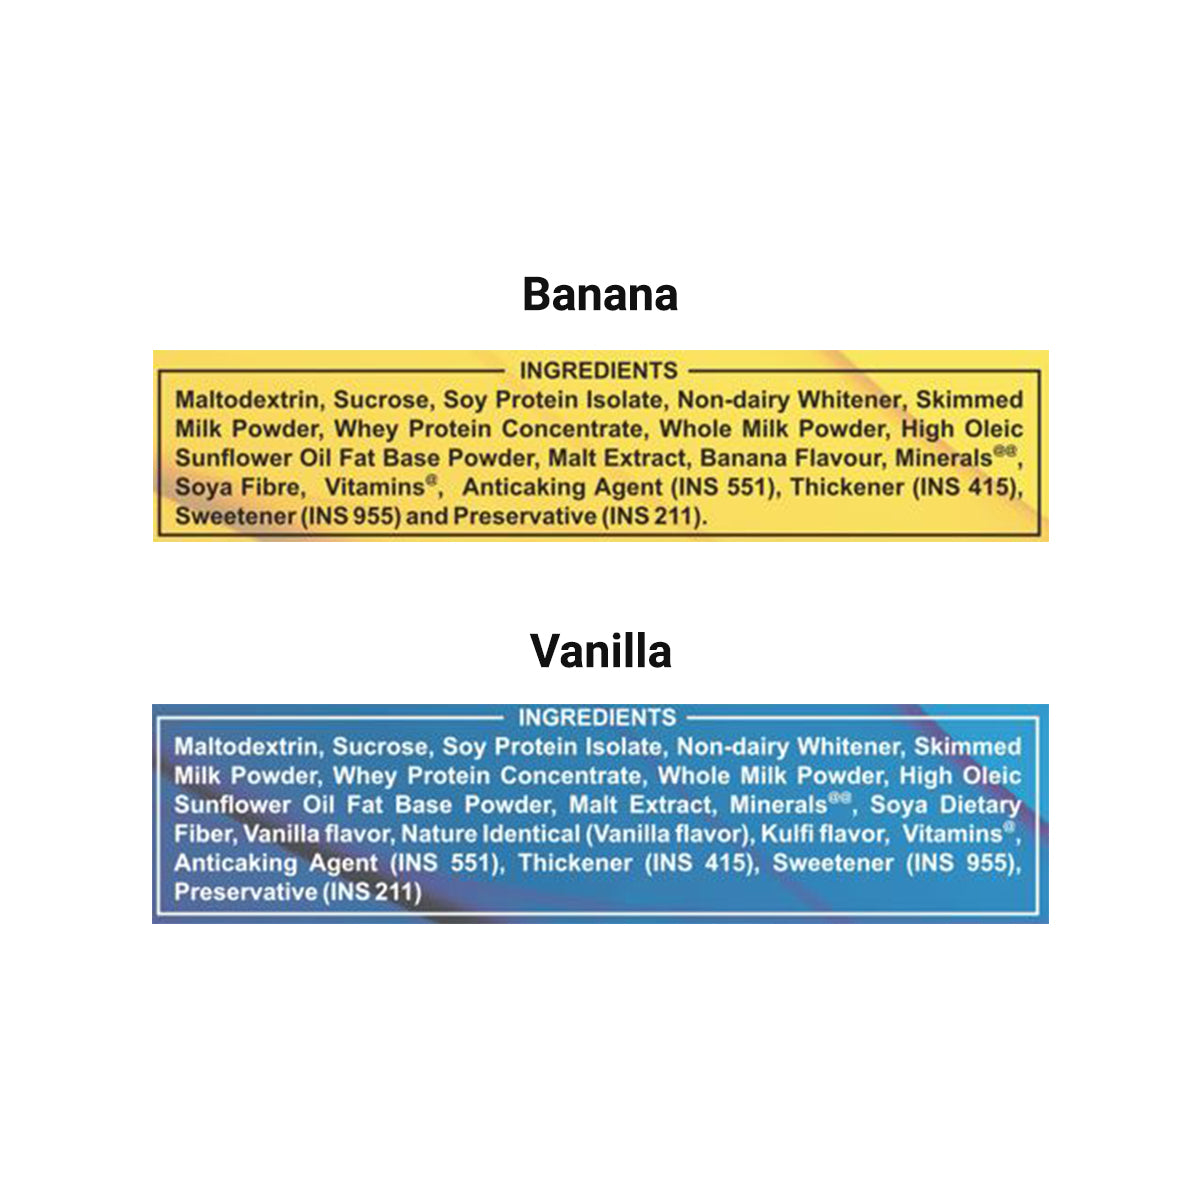 Banana and Vanilla Combo ingredients